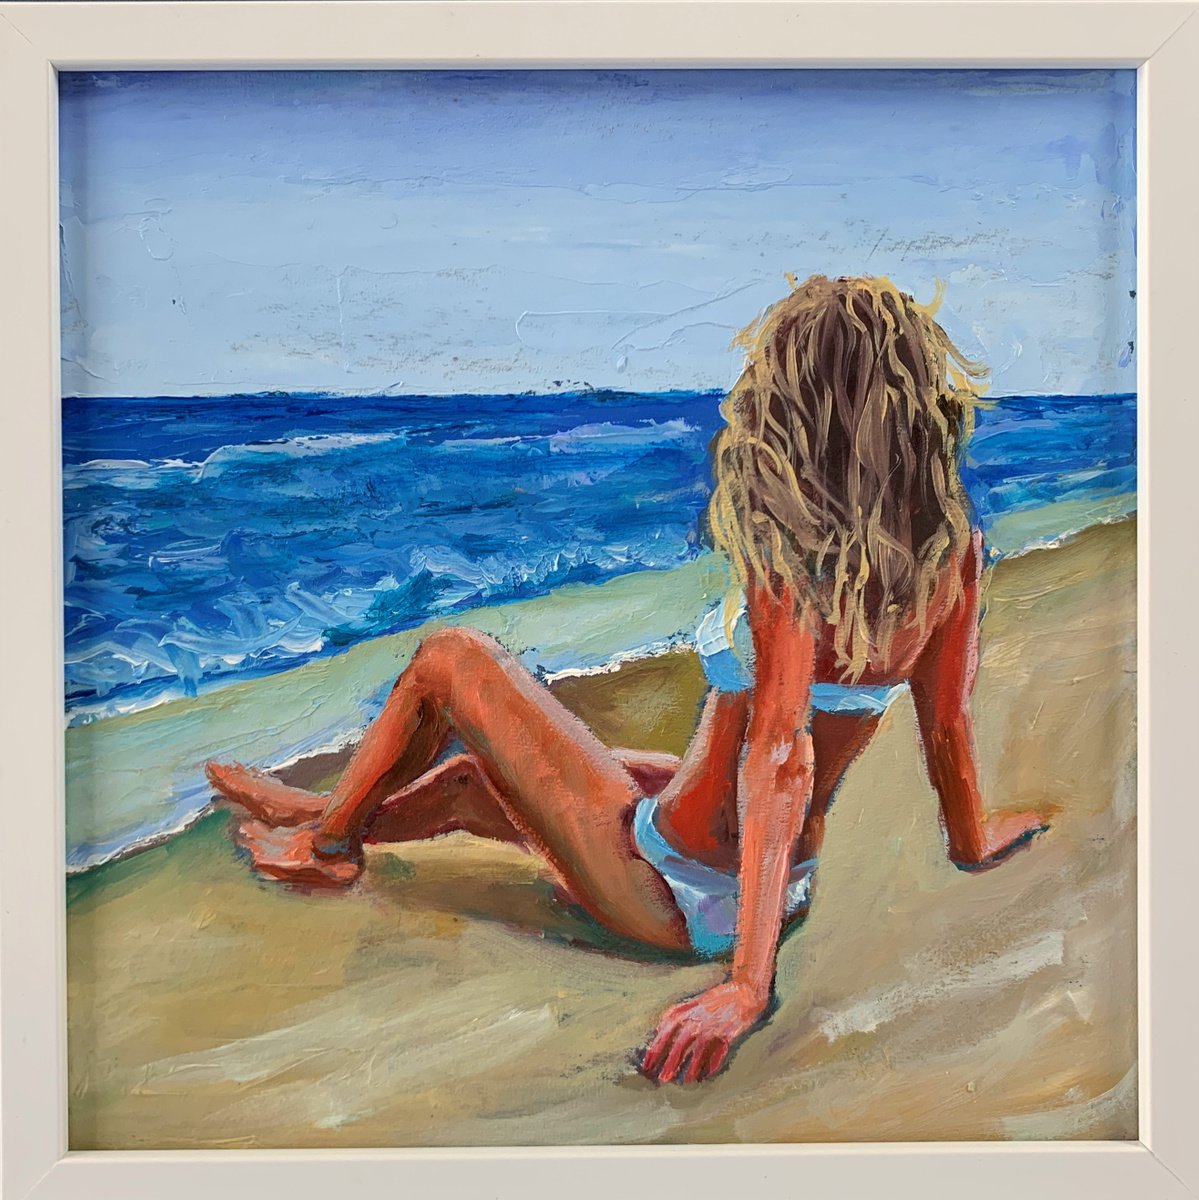 Woman on the beach by Vita Schagen